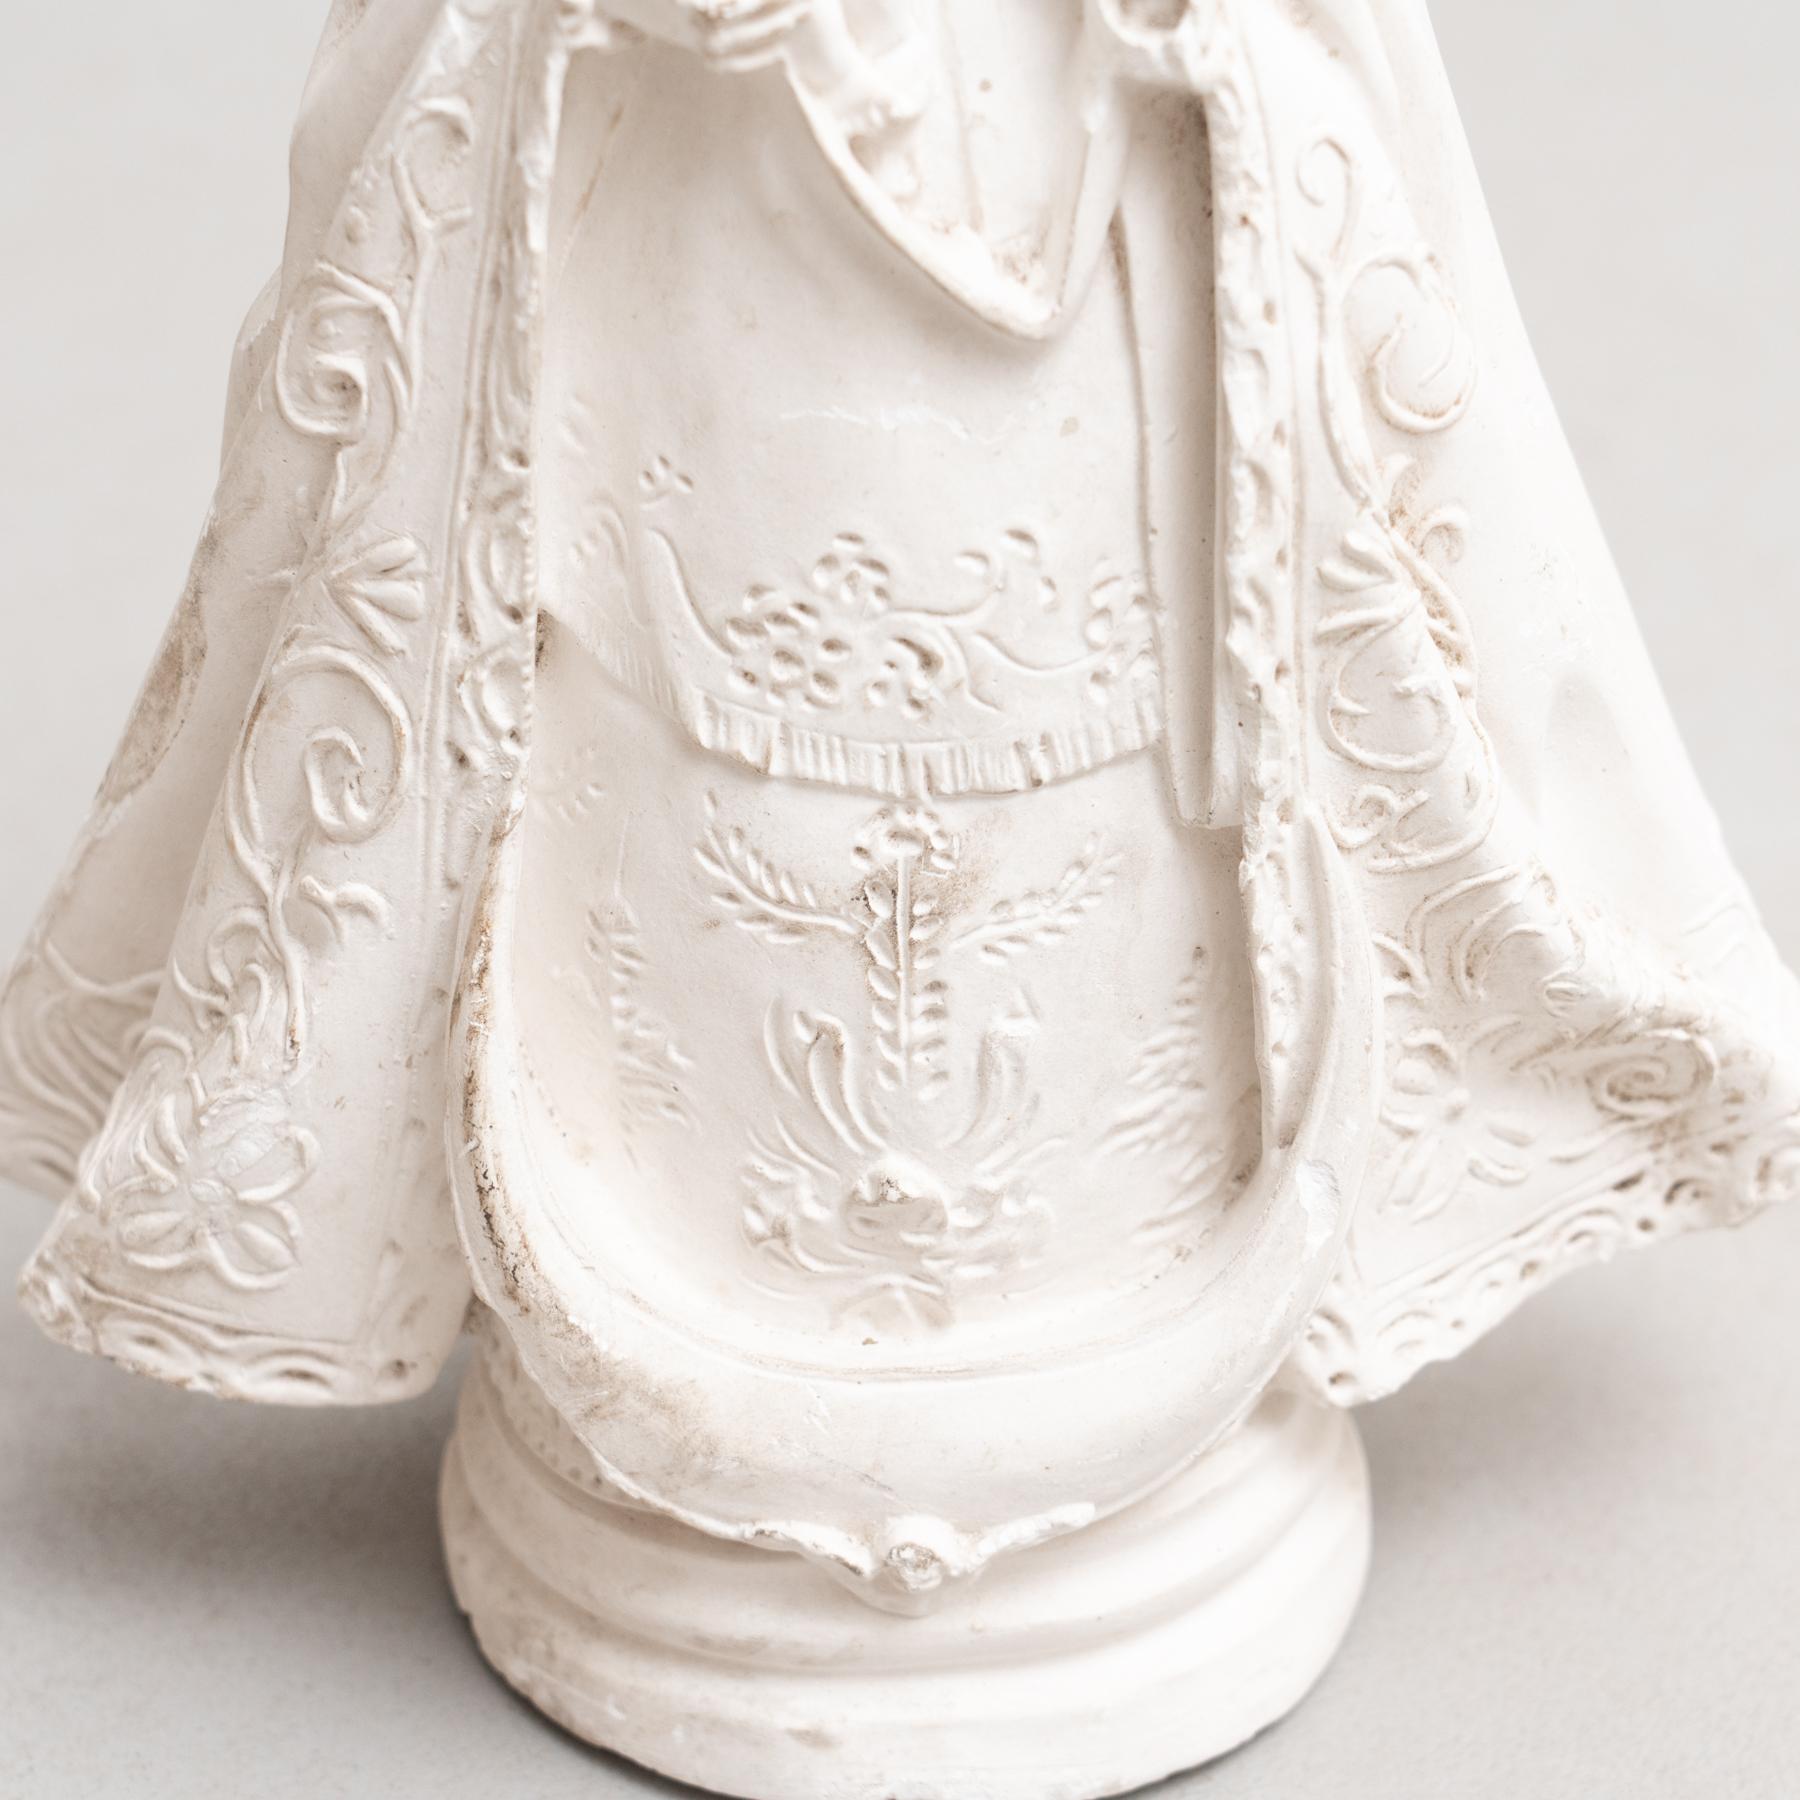 Modern Plaster Virgin Traditional Figure, circa 1950 For Sale